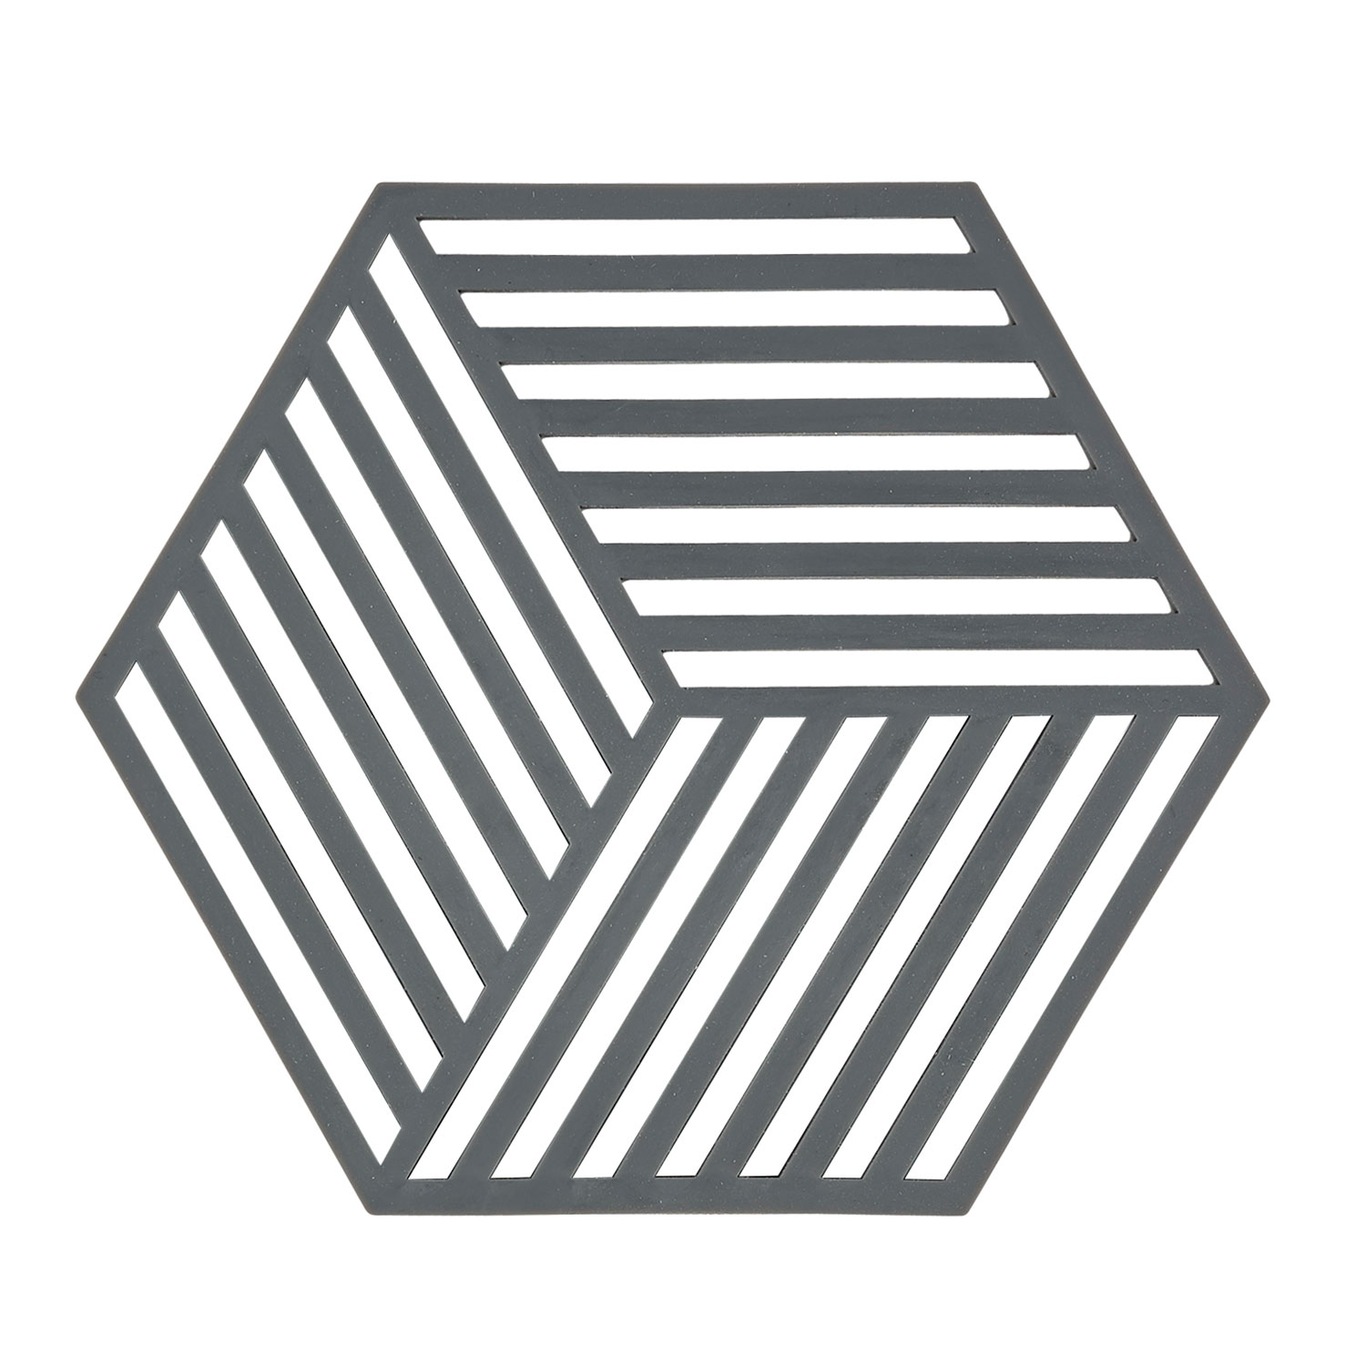 Hexagon Grytunderlägg, Grå